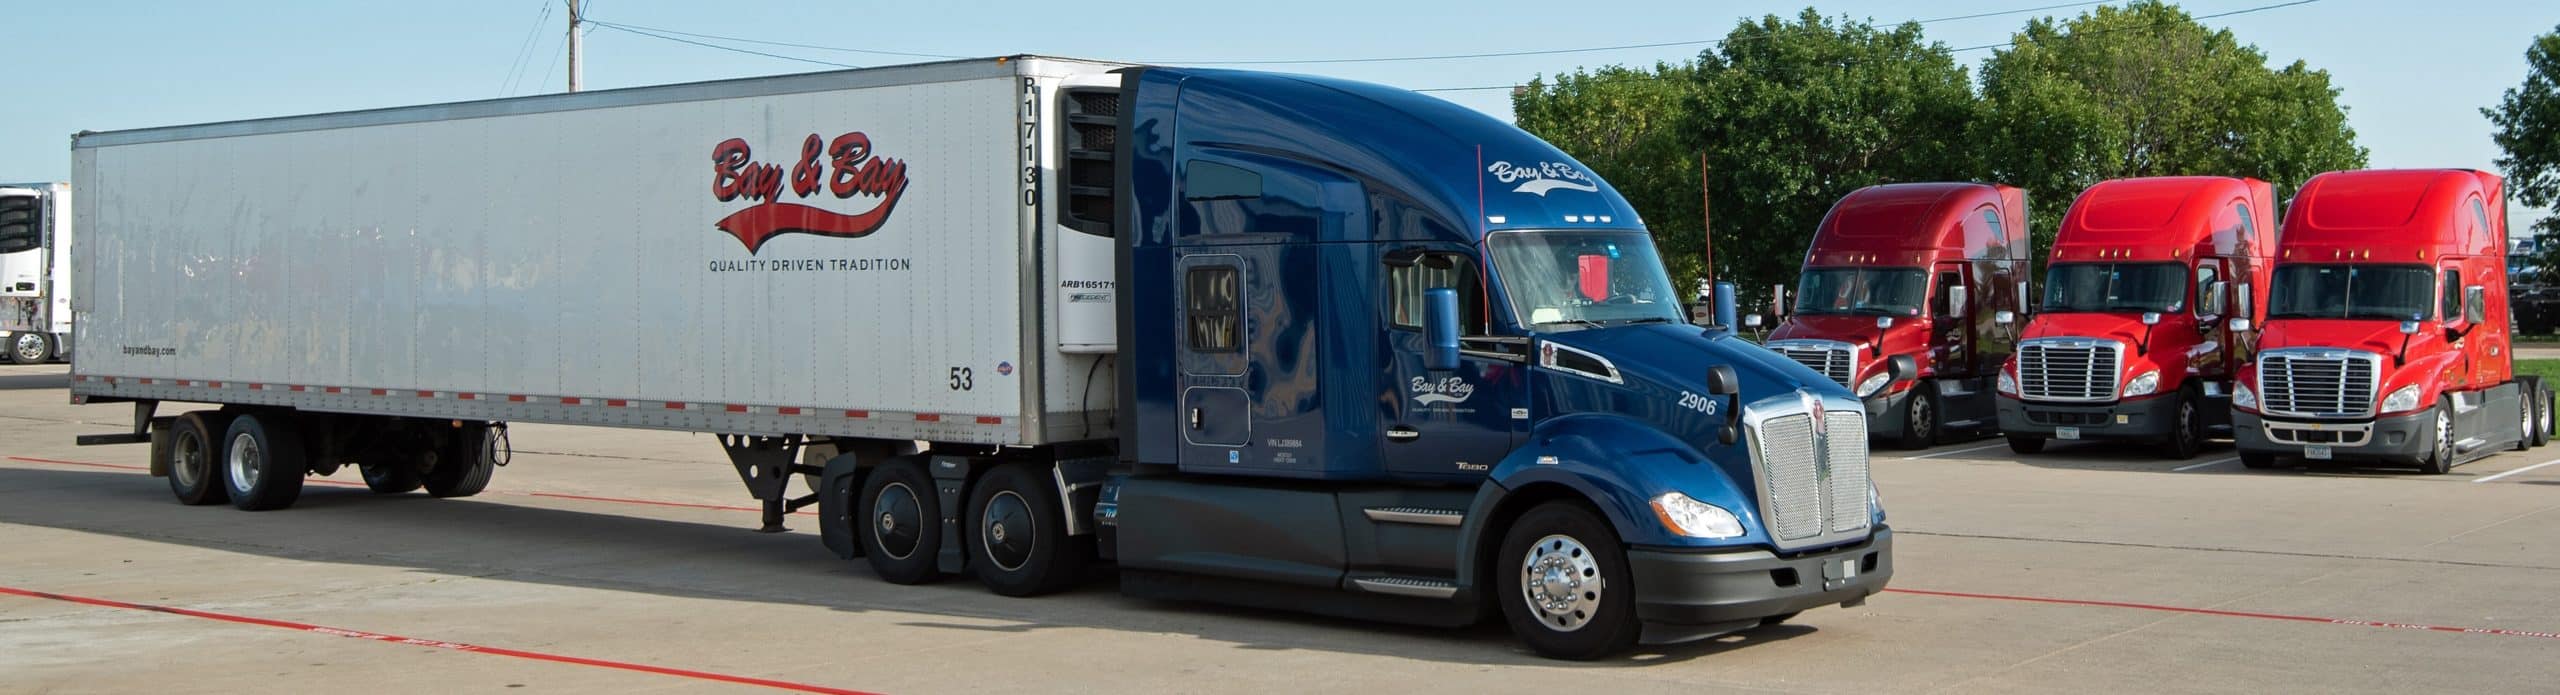 cdl truck driving jobs minnesota company texas terminal